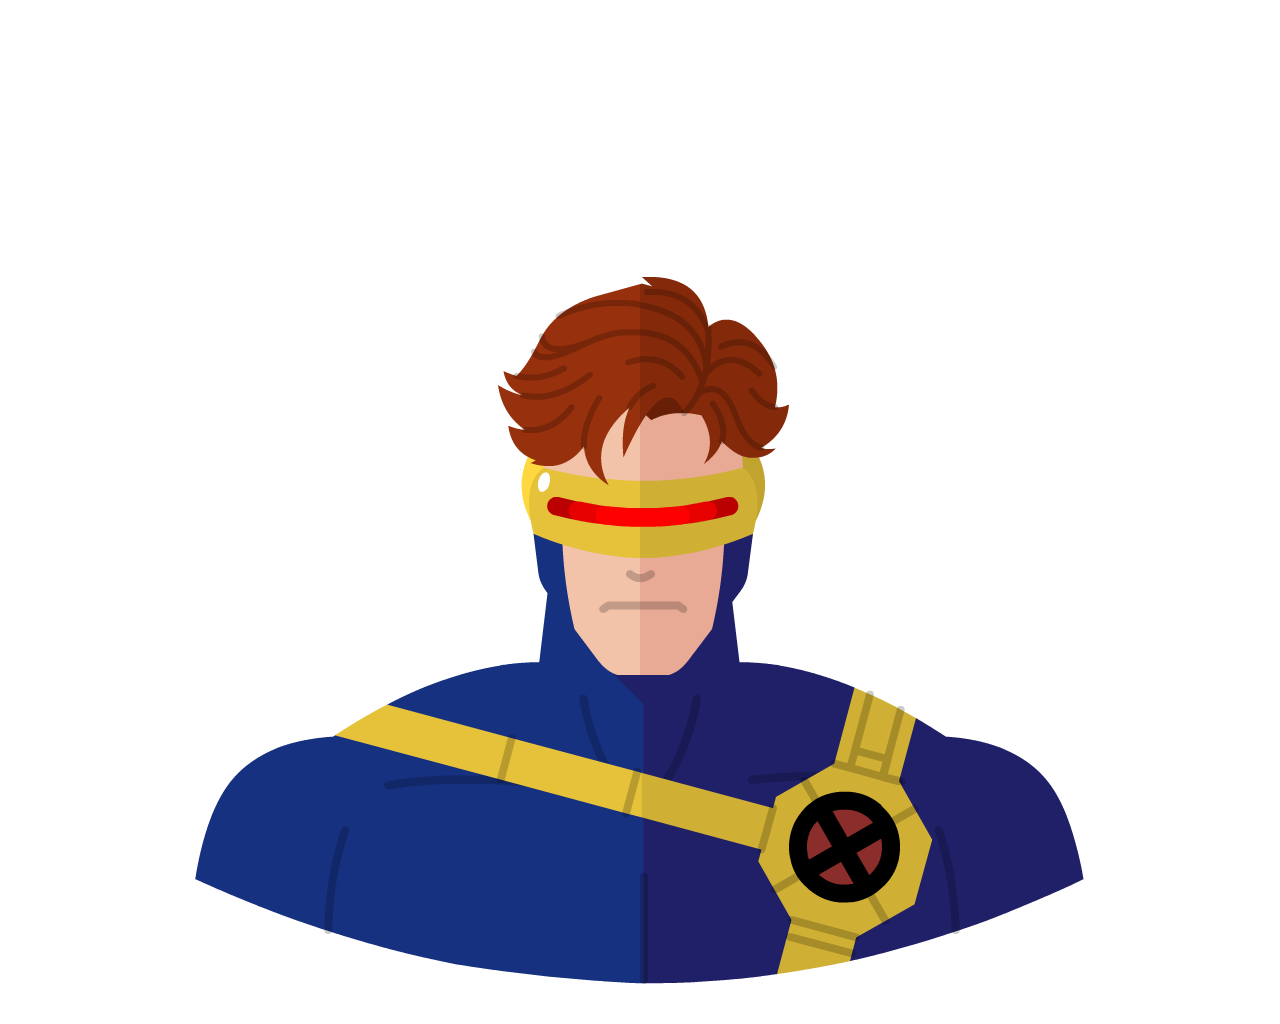 Cyclops (X-men ’97 Ver.) flat icon